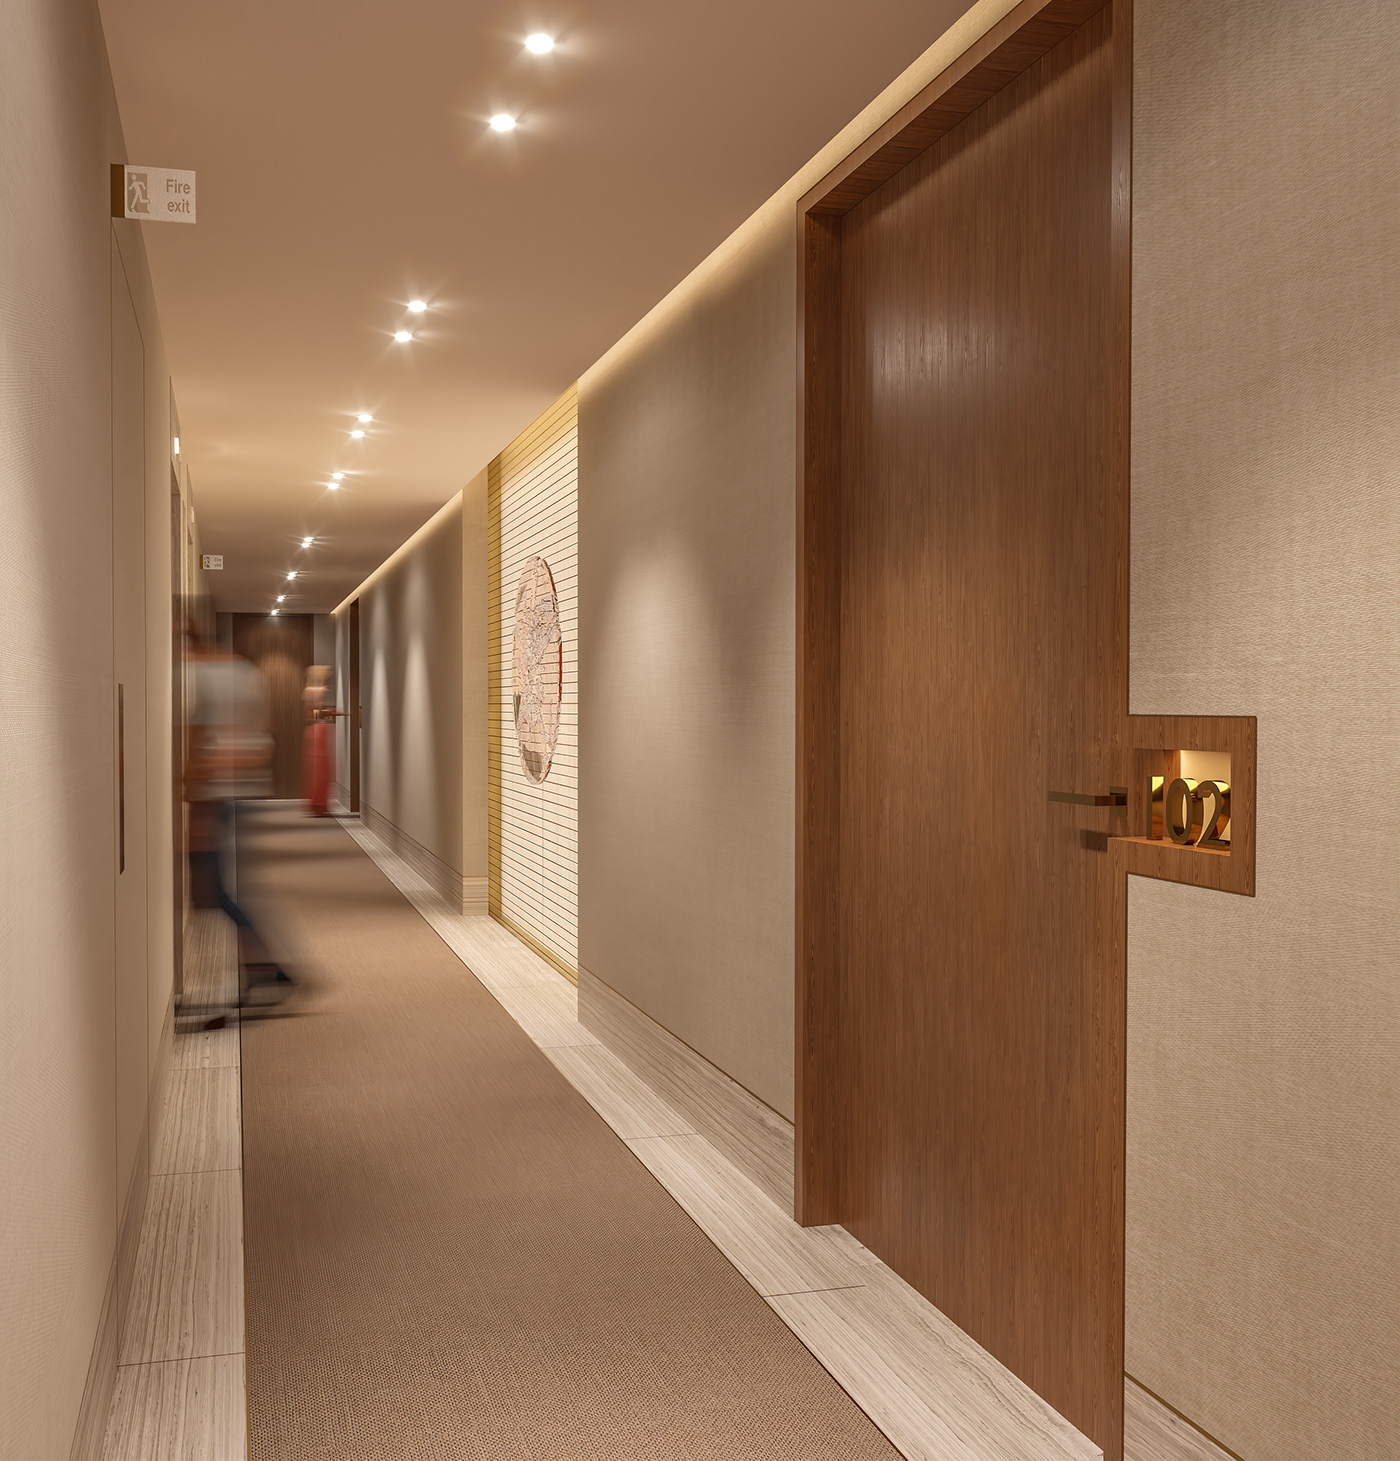 archviz 3ds max cyprus vray visualization hotel Hospitality cyprusarchitecture